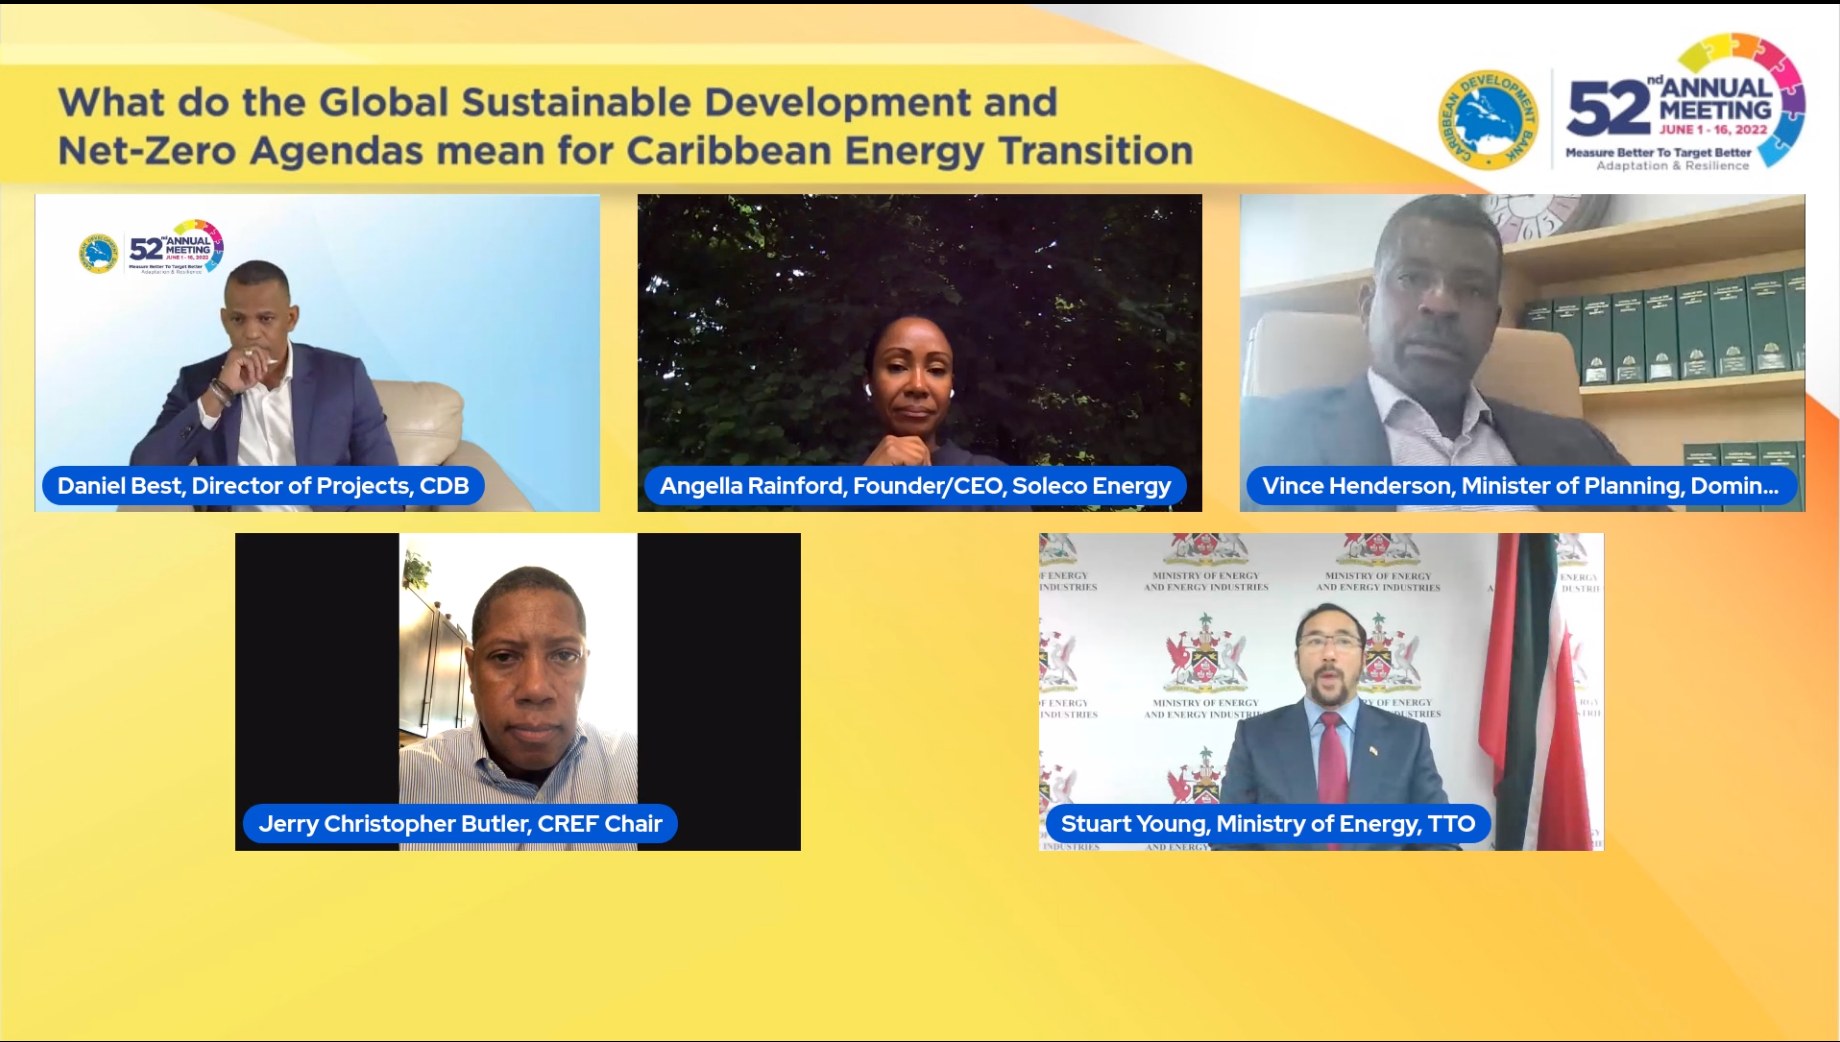 Screenshot of energy seminar speakers against yellow background